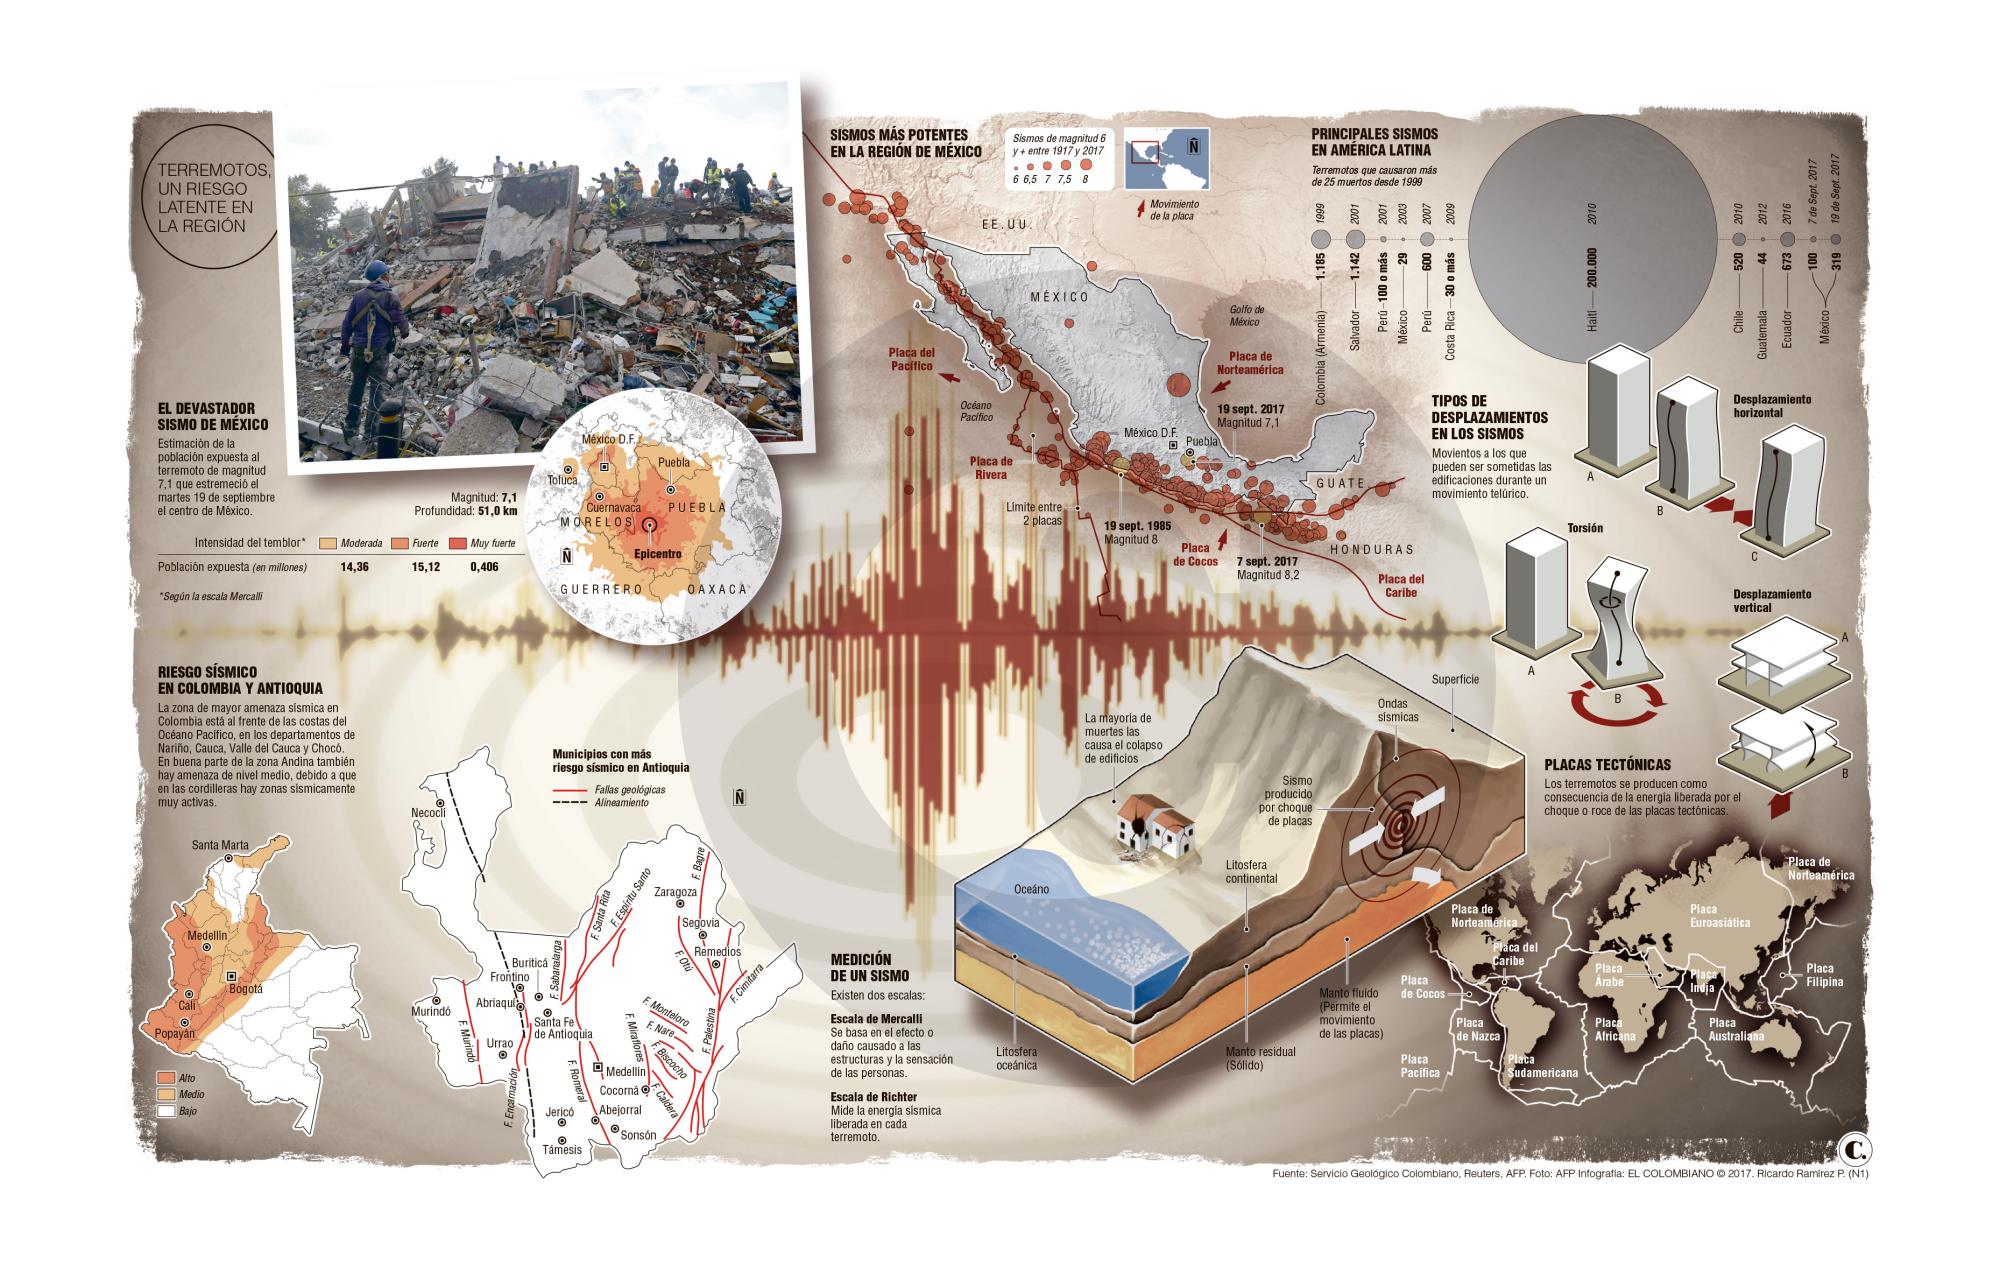 ¿Dónde será el próximo terremoto? Nadie sabe